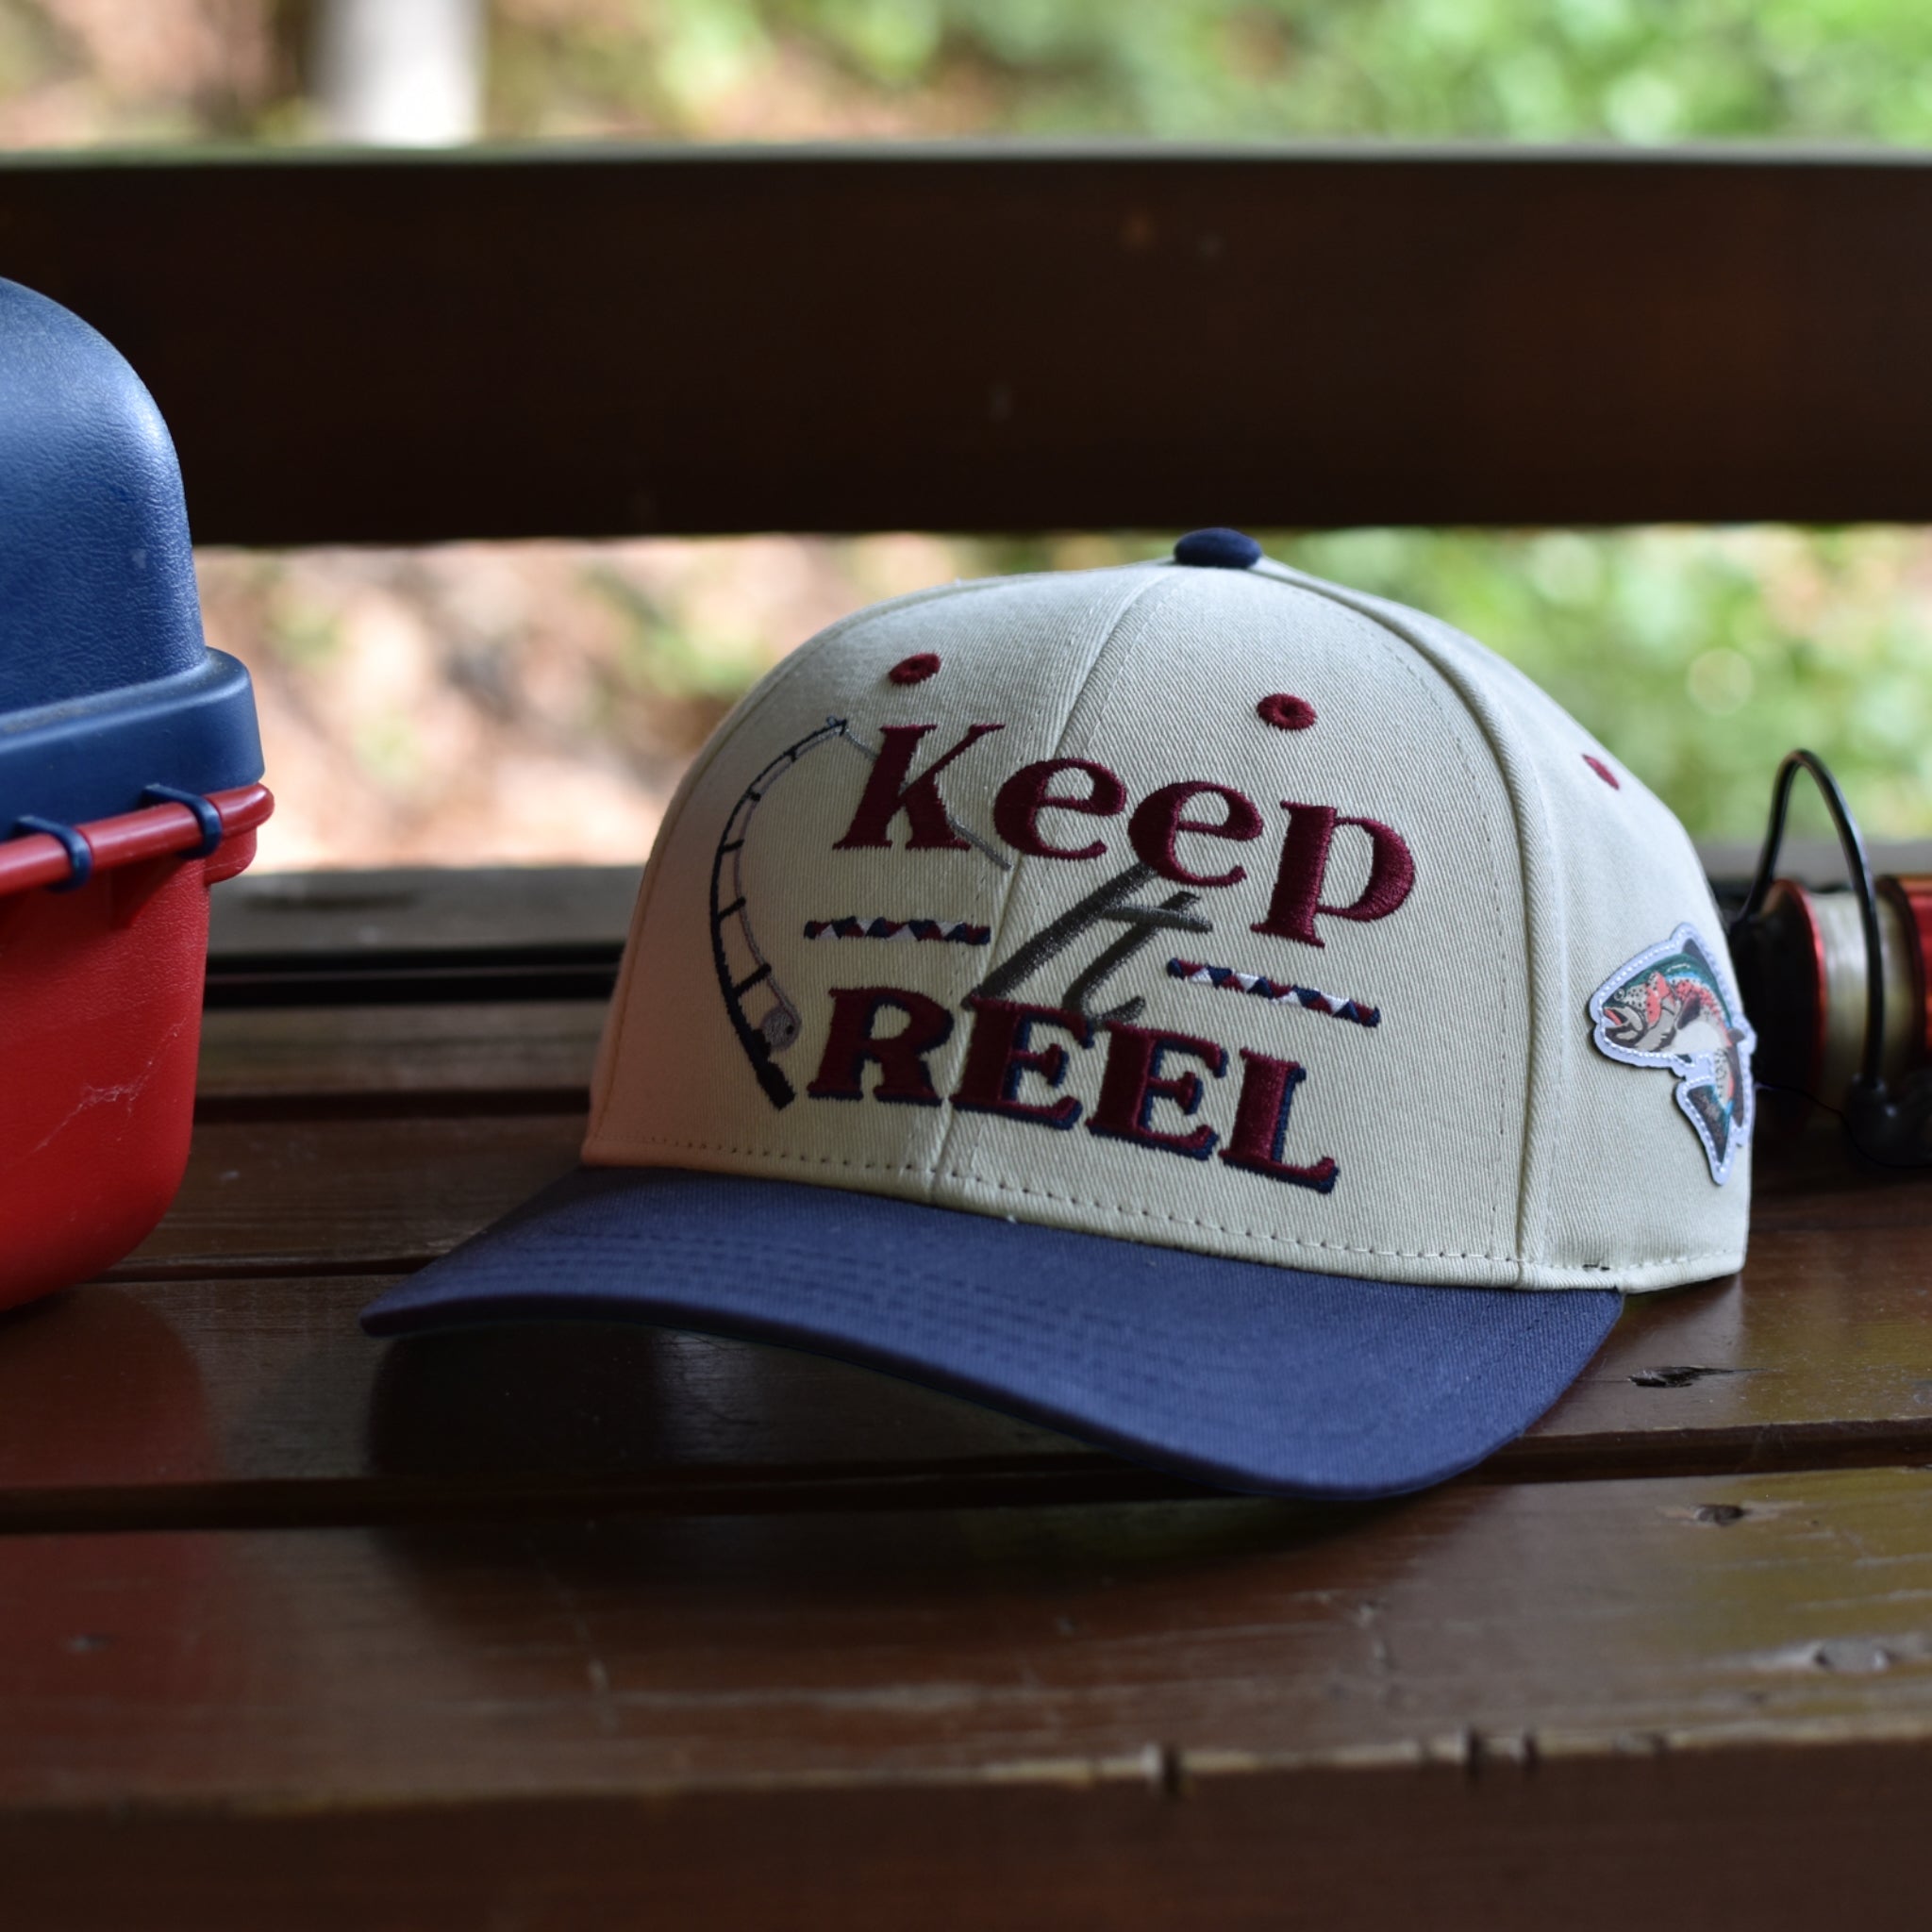 Fishing Hats With Vintage Style  Keep It Reel Snapback – Shells